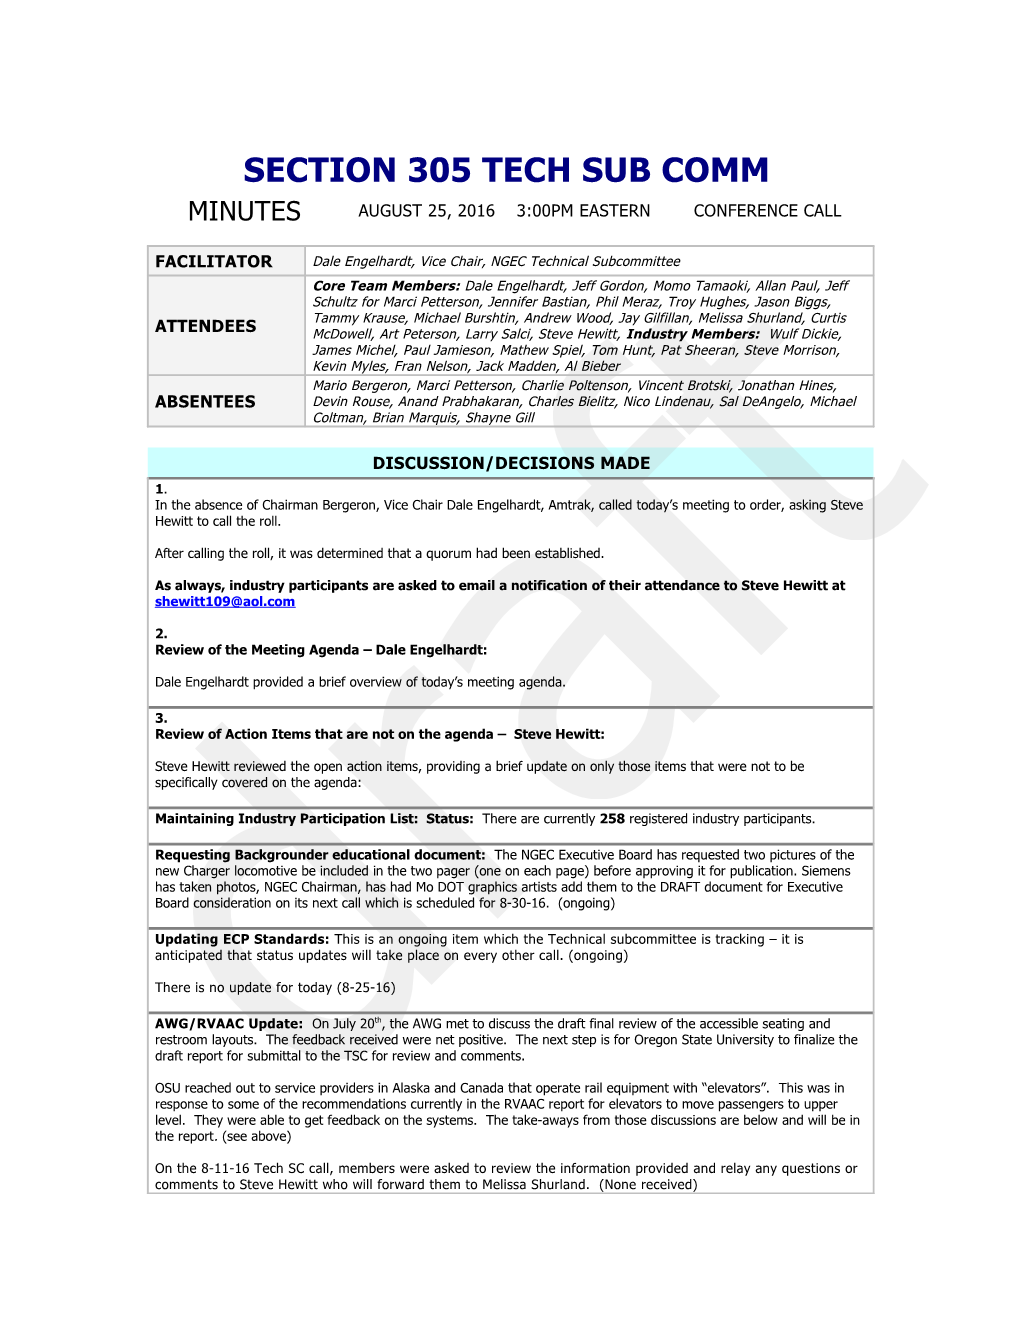 Section 305 Tech Sub Comm s18